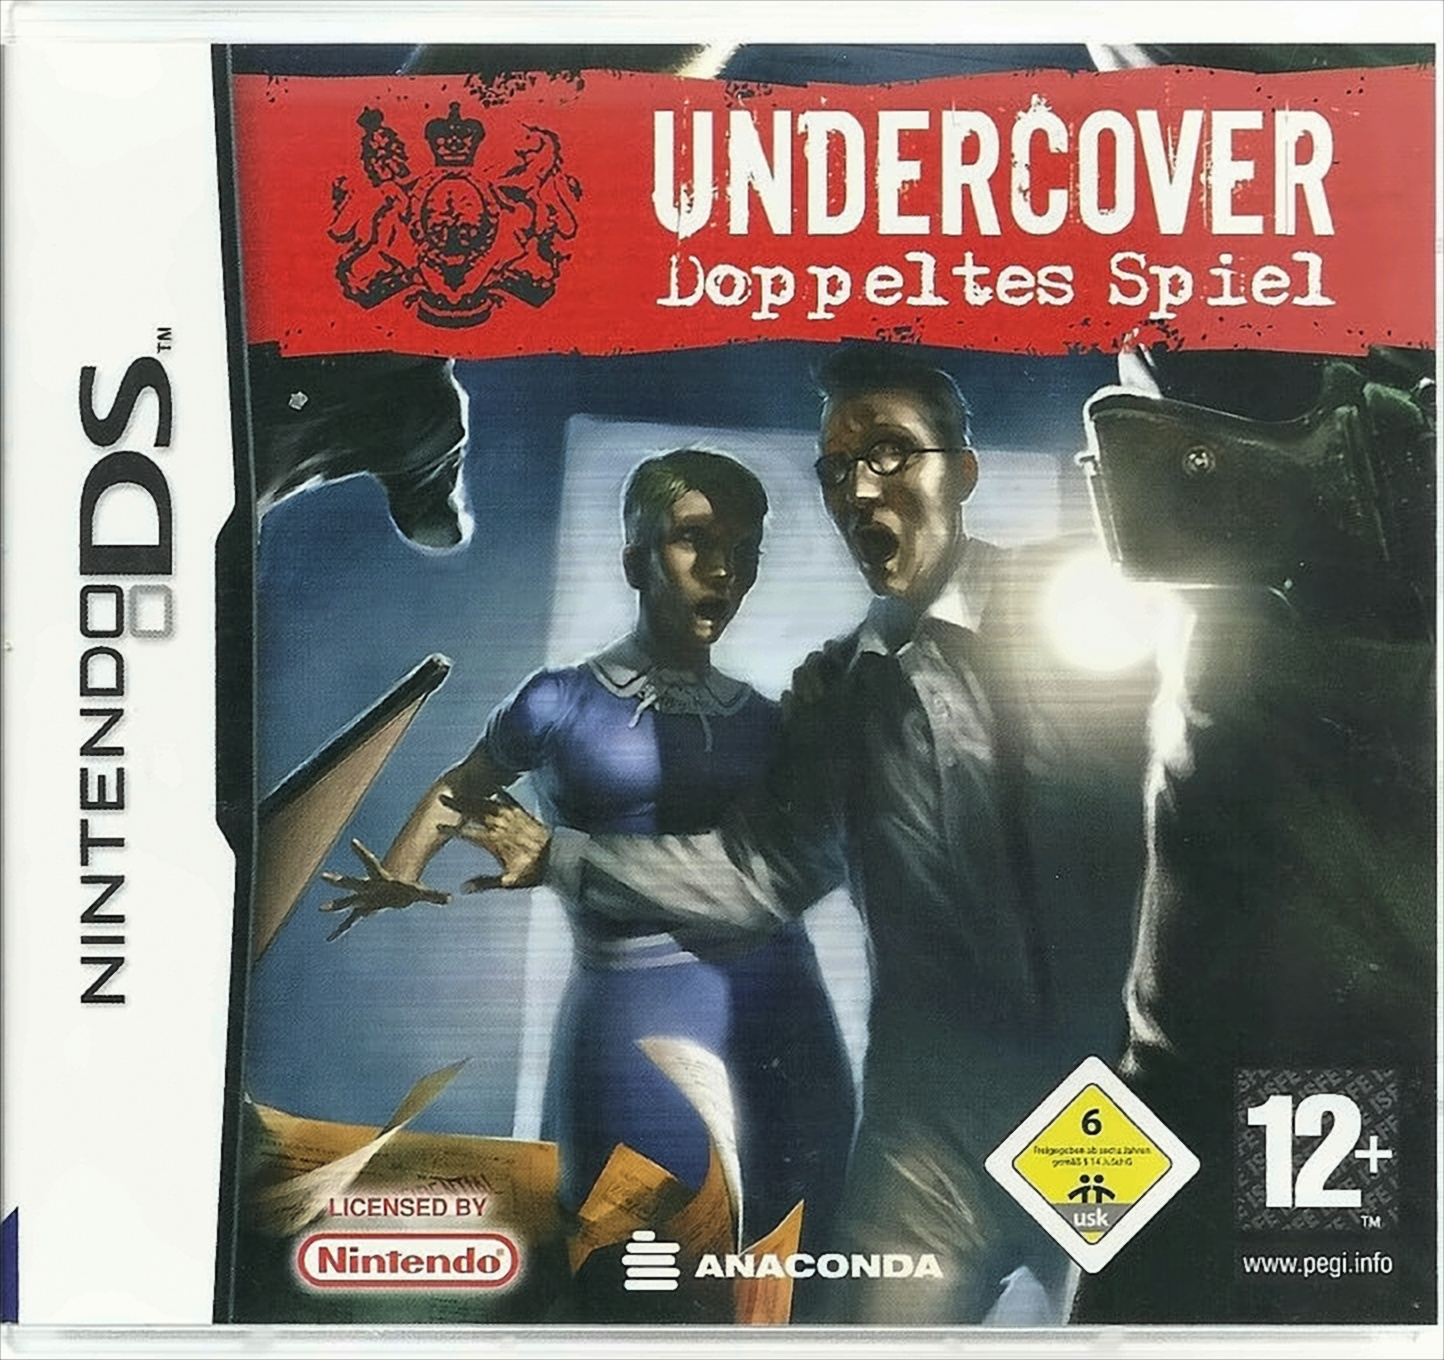 [Nintendo Doppeltes DS] Undercover: - Spiel